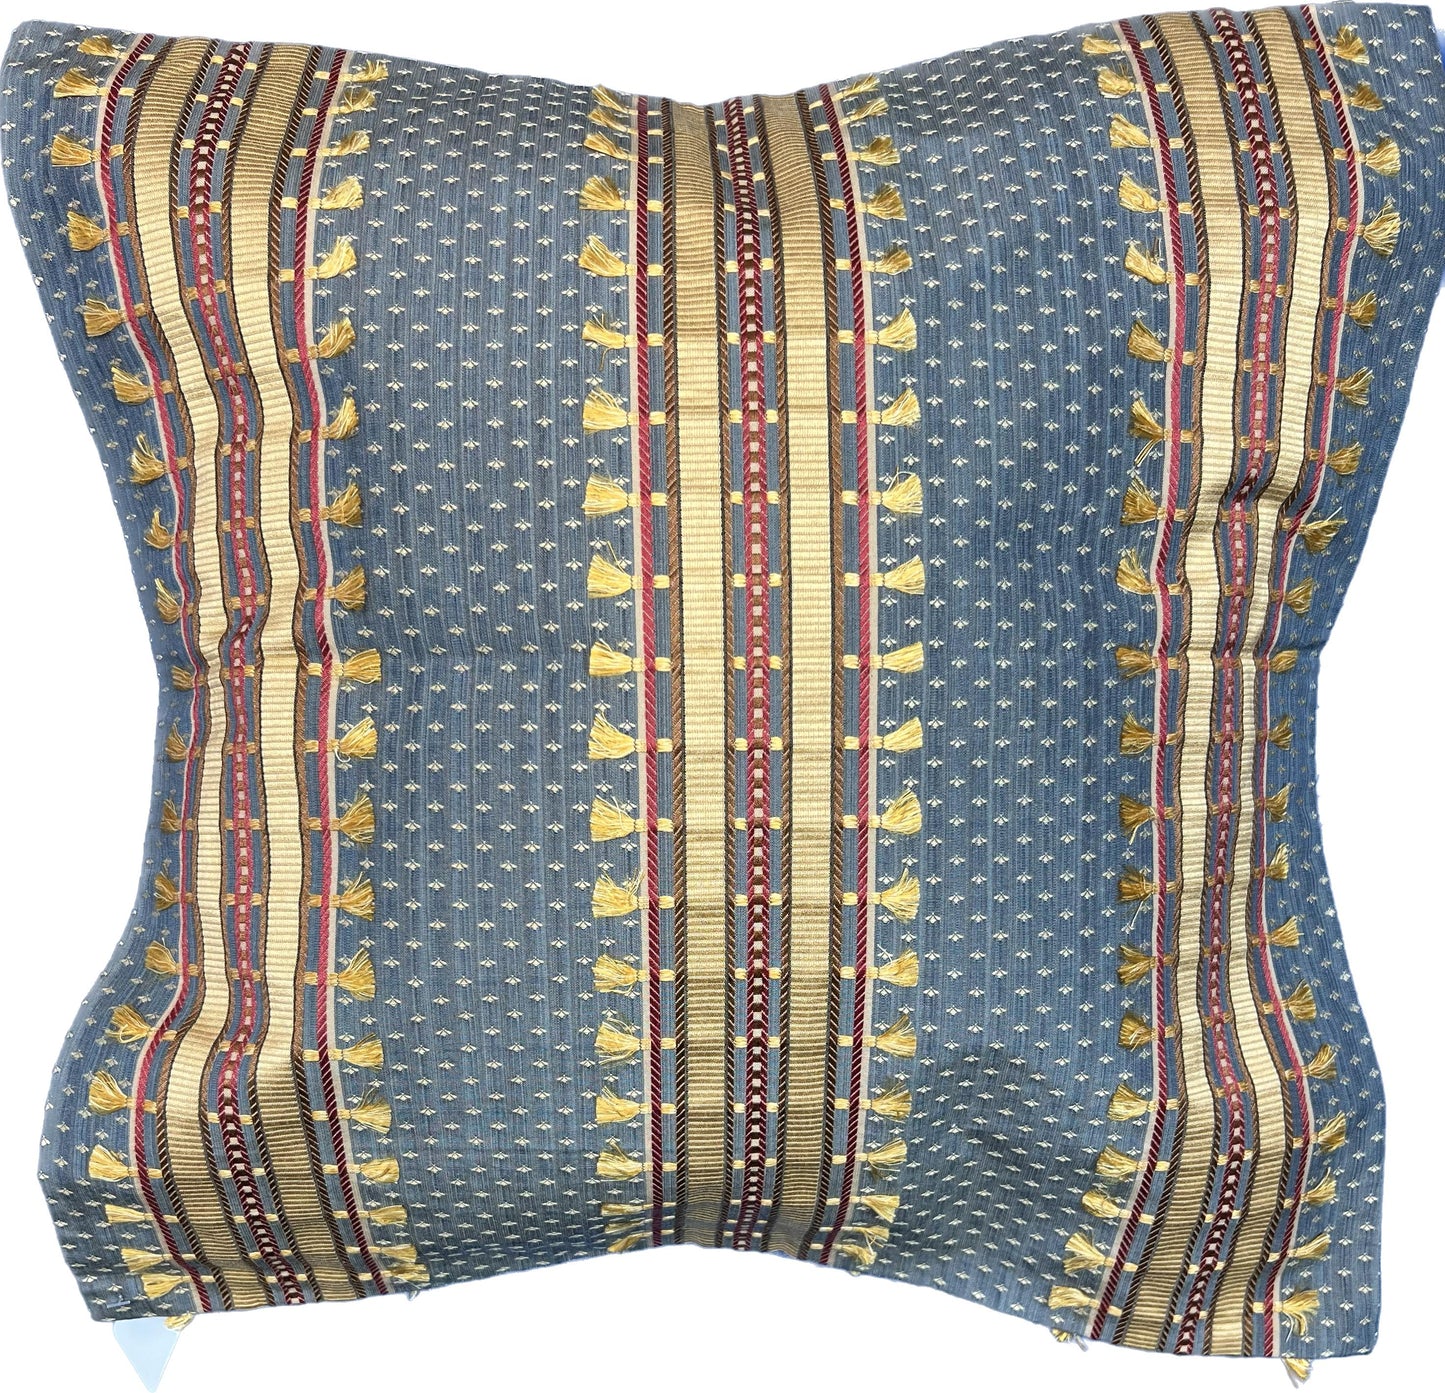 20"x20" Small Tassel Stripe Pillow Cover